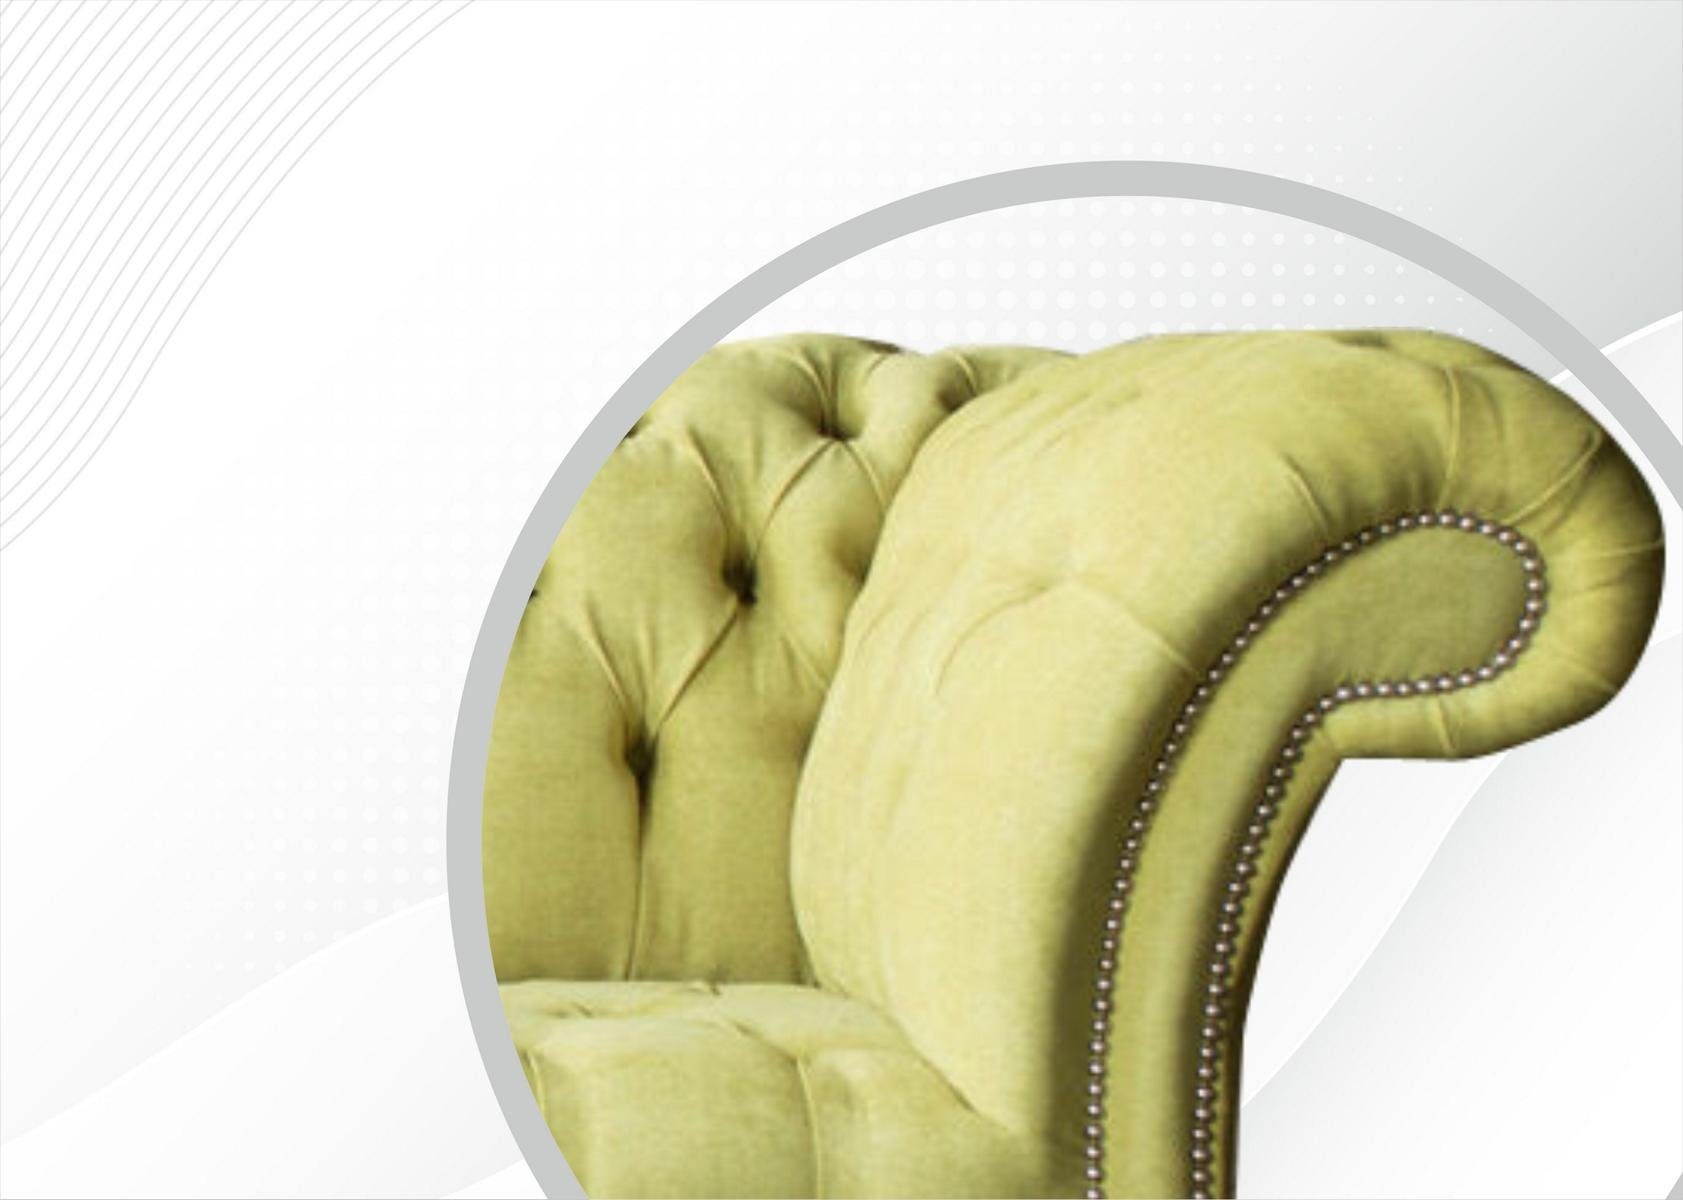 Couch Chesterfield-Sofa, Wohnzimmer Polster 2Sitzer Sofas Design JVmoebel Chesterfield Sofa